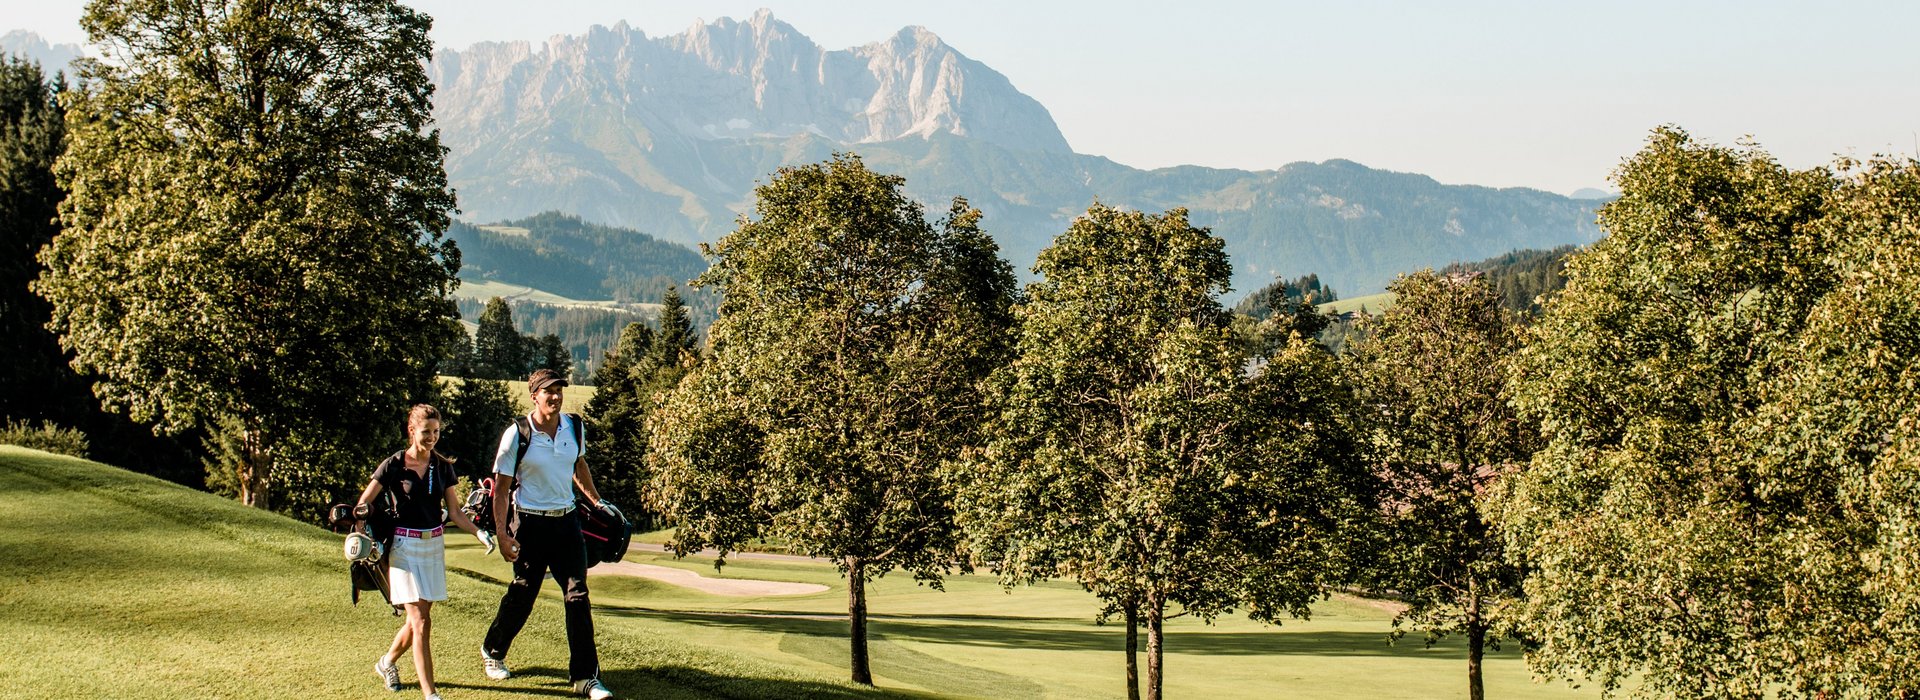 Golfplatz Schwarzsee